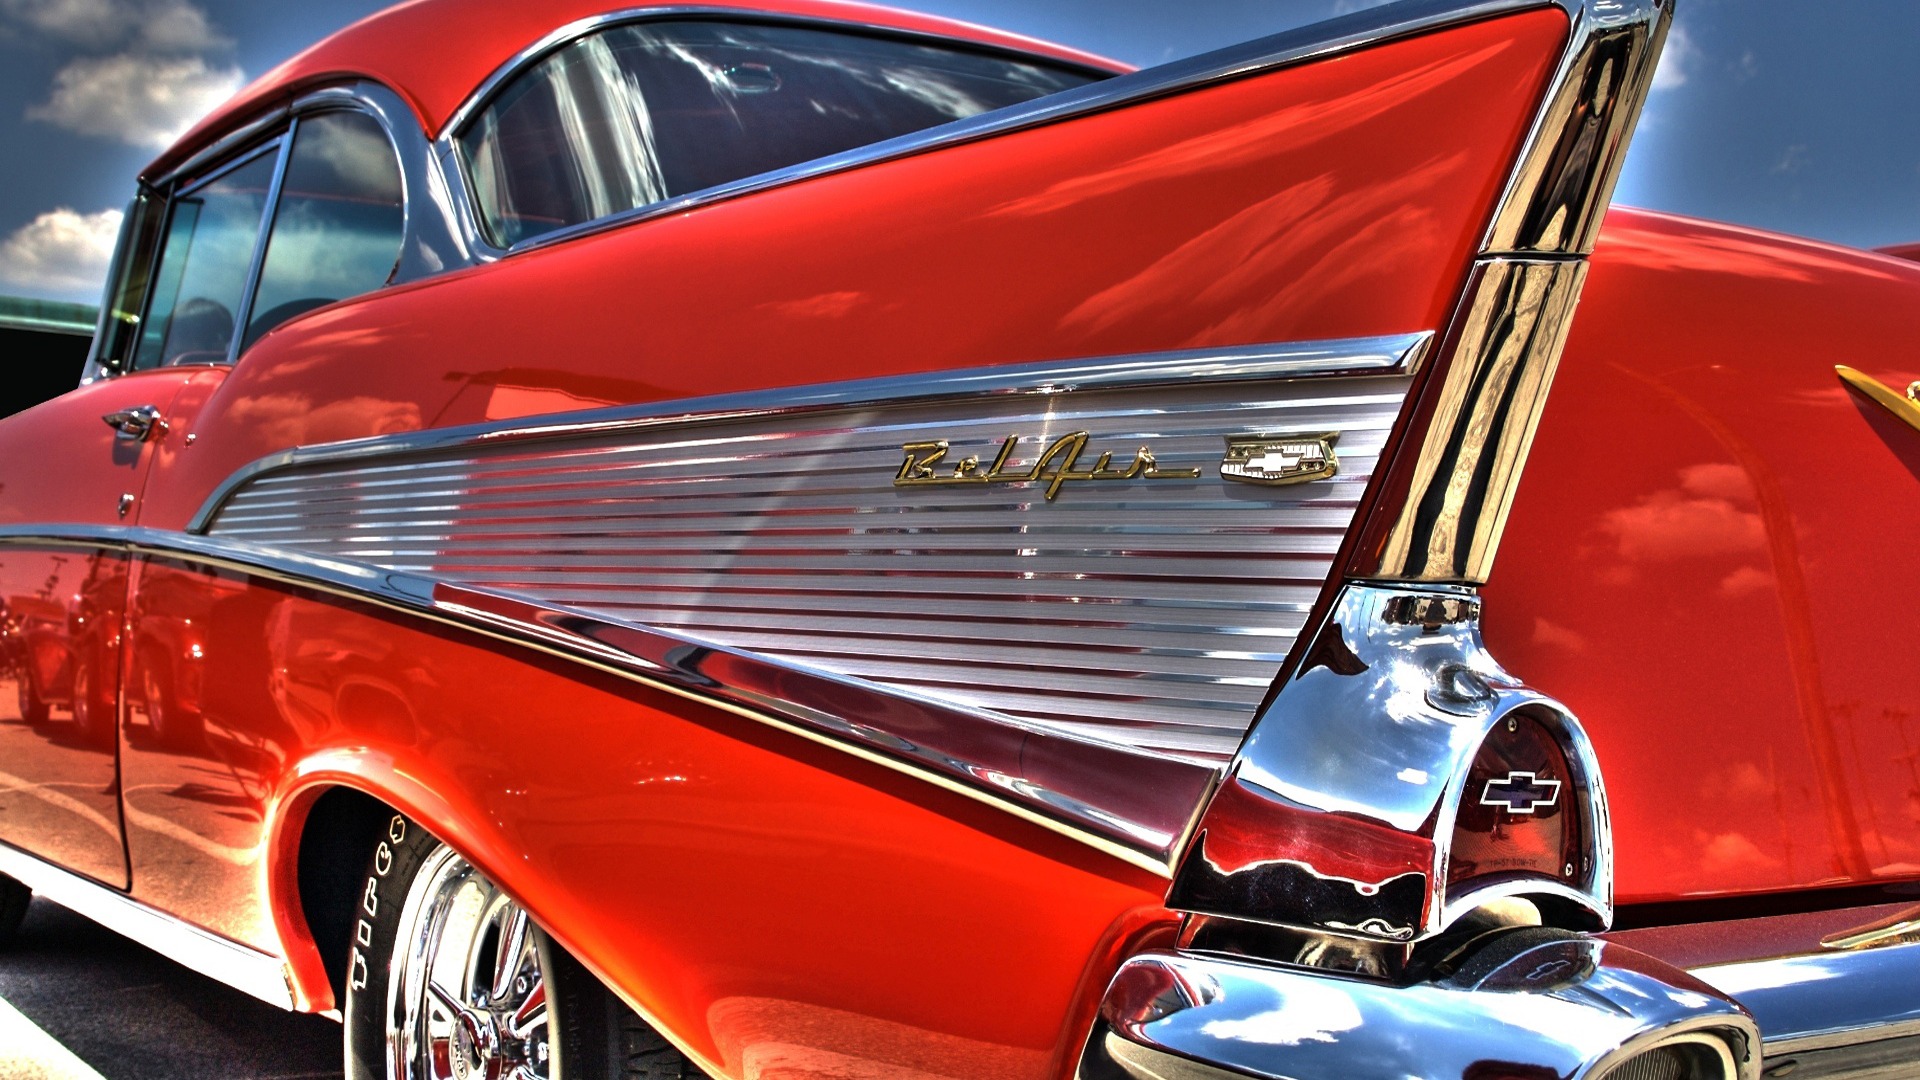 For Desktop Background Chevy Car Image Pc Wallpaper